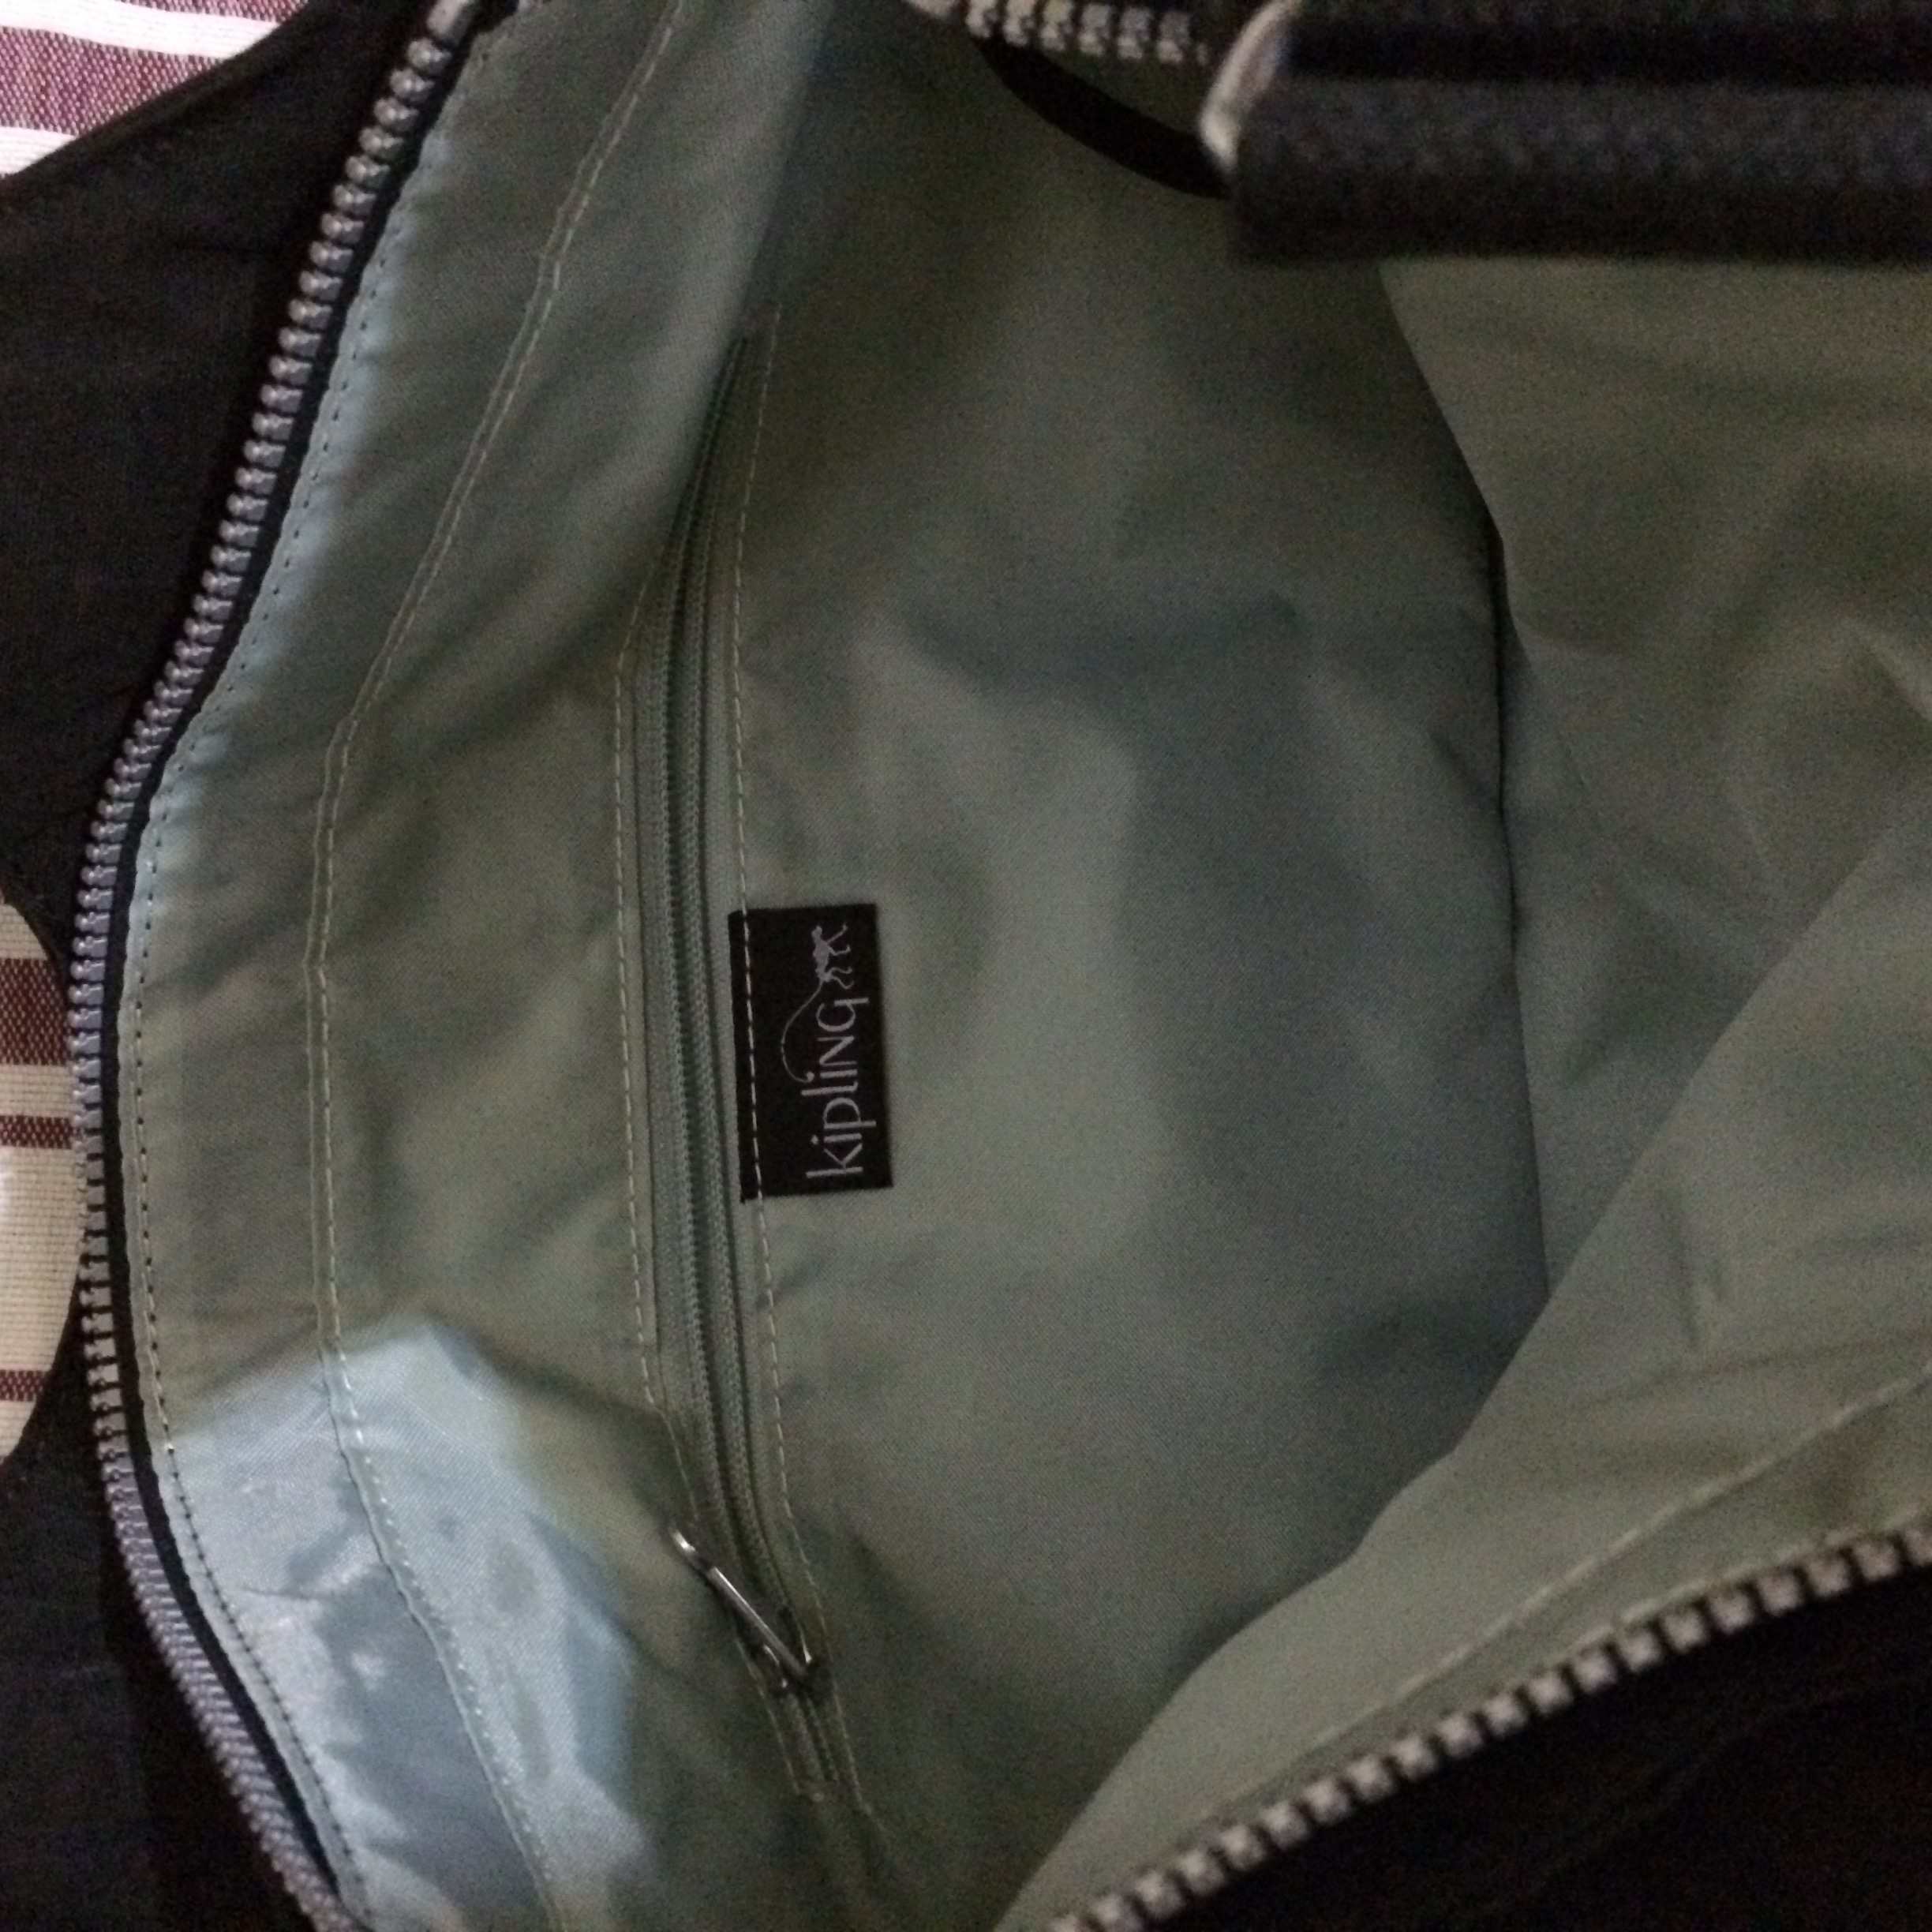 BN Kipling Bag Cicely from London